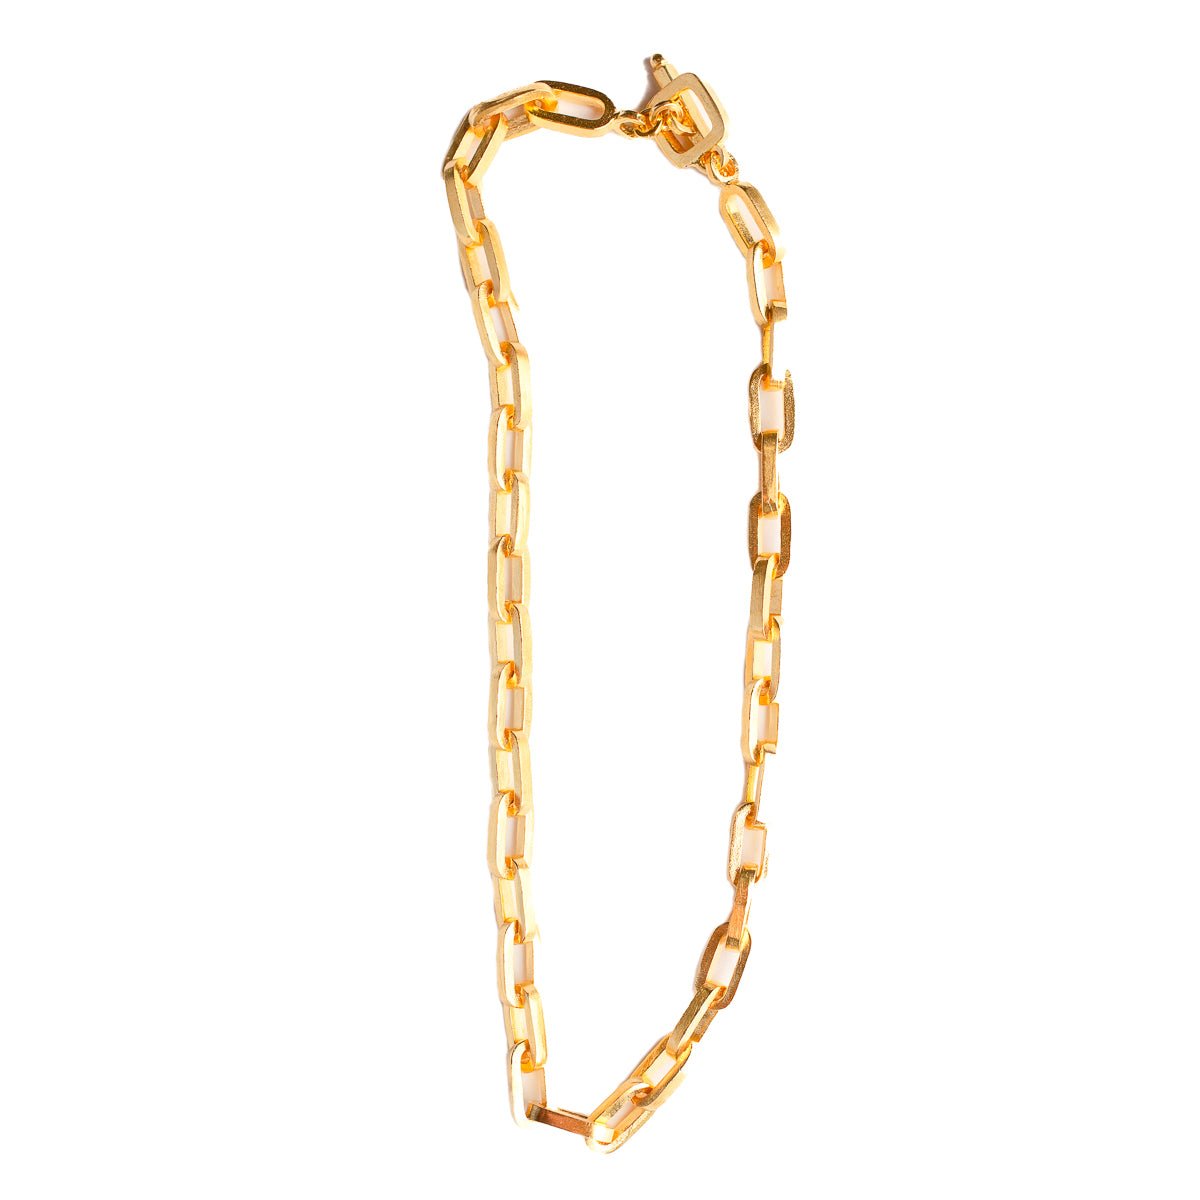 Rectangular Fashion Brass Chain For Men at Rs 250/piece | पीतल की चेन in  Raigad | ID: 15648907397